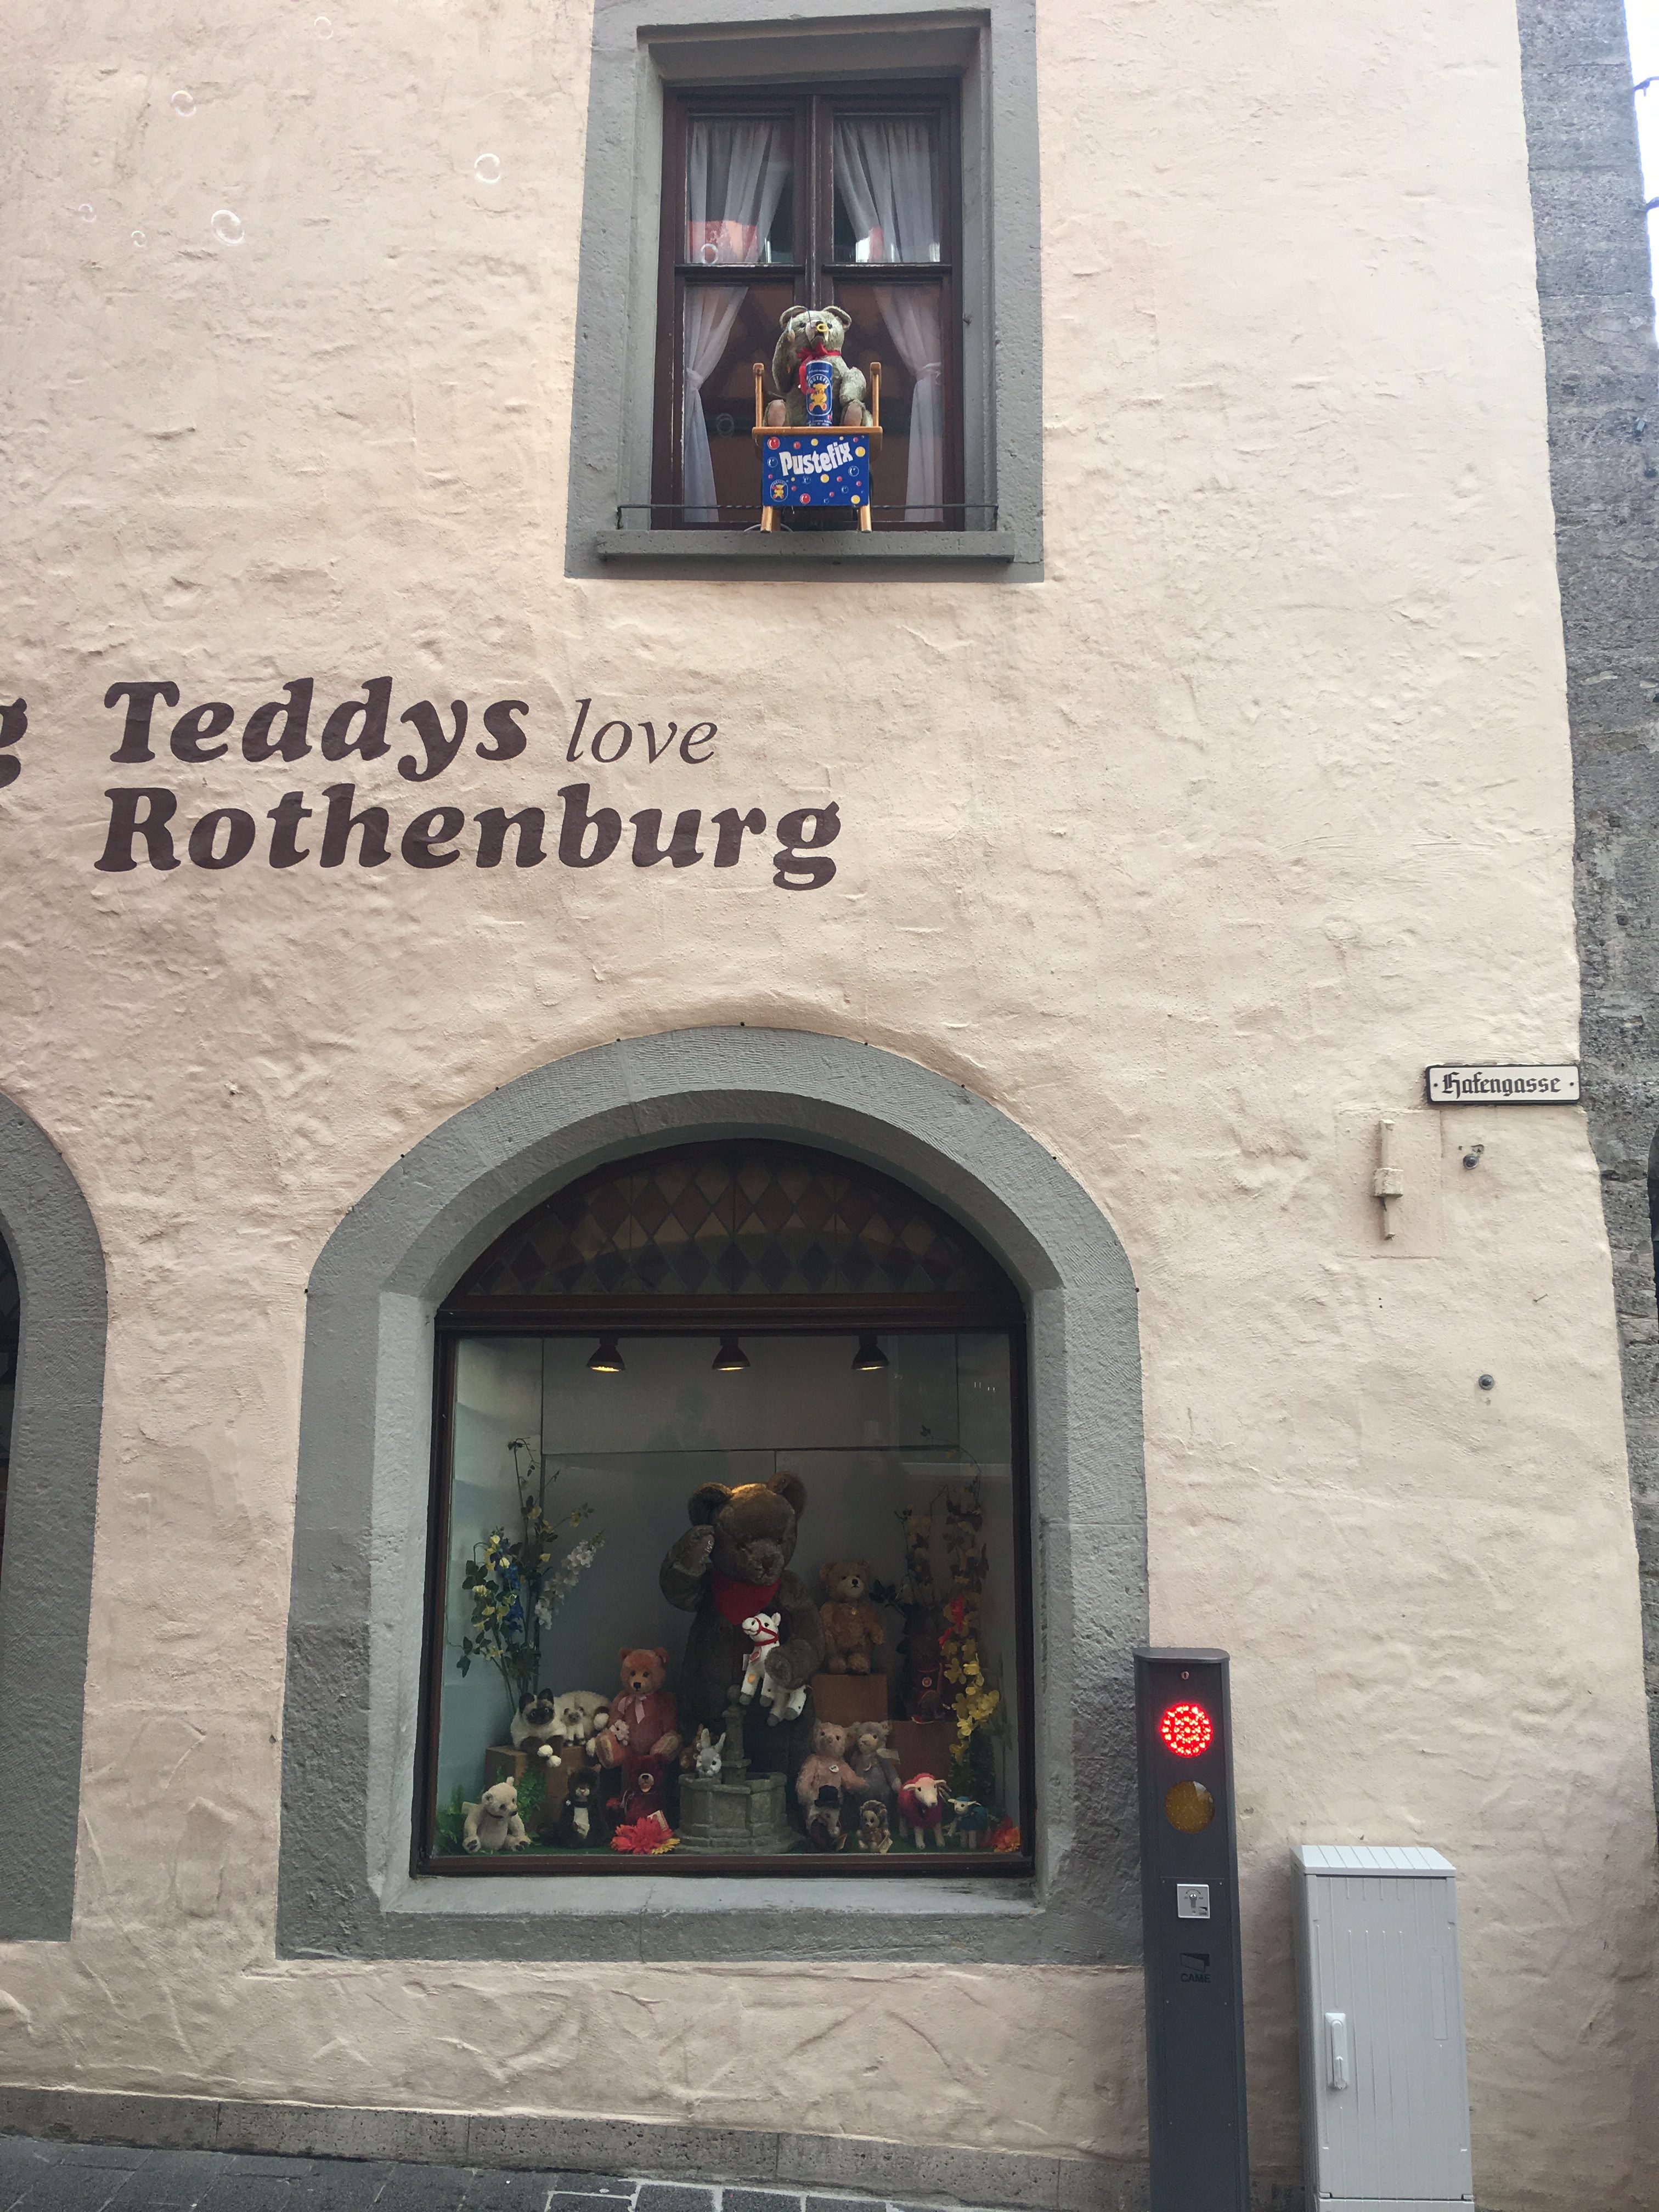 Teddys love Rothenburg